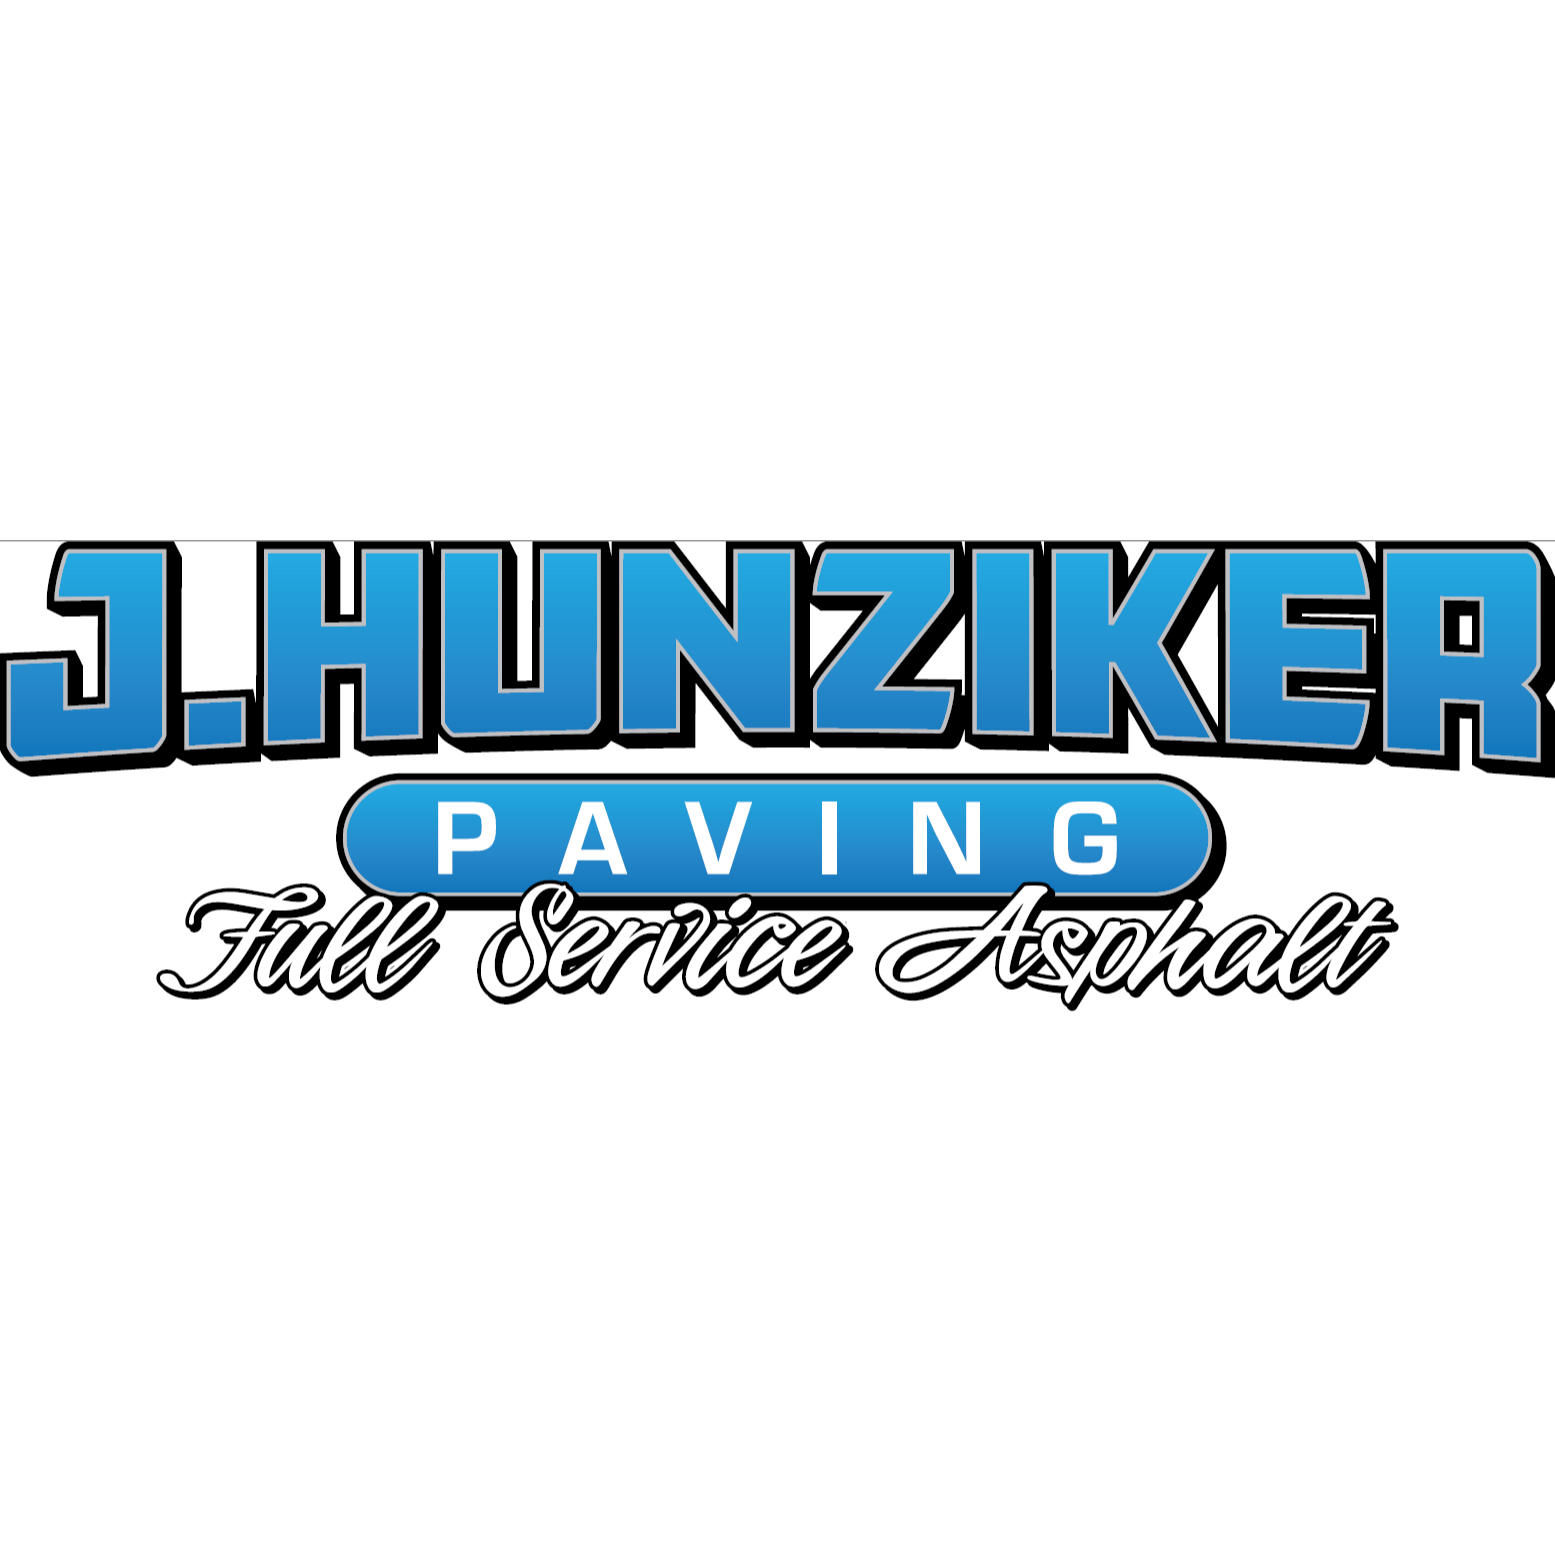 J Hunziker Paving - Rensselaer, NY 12144 - (518)932-3967 | ShowMeLocal.com